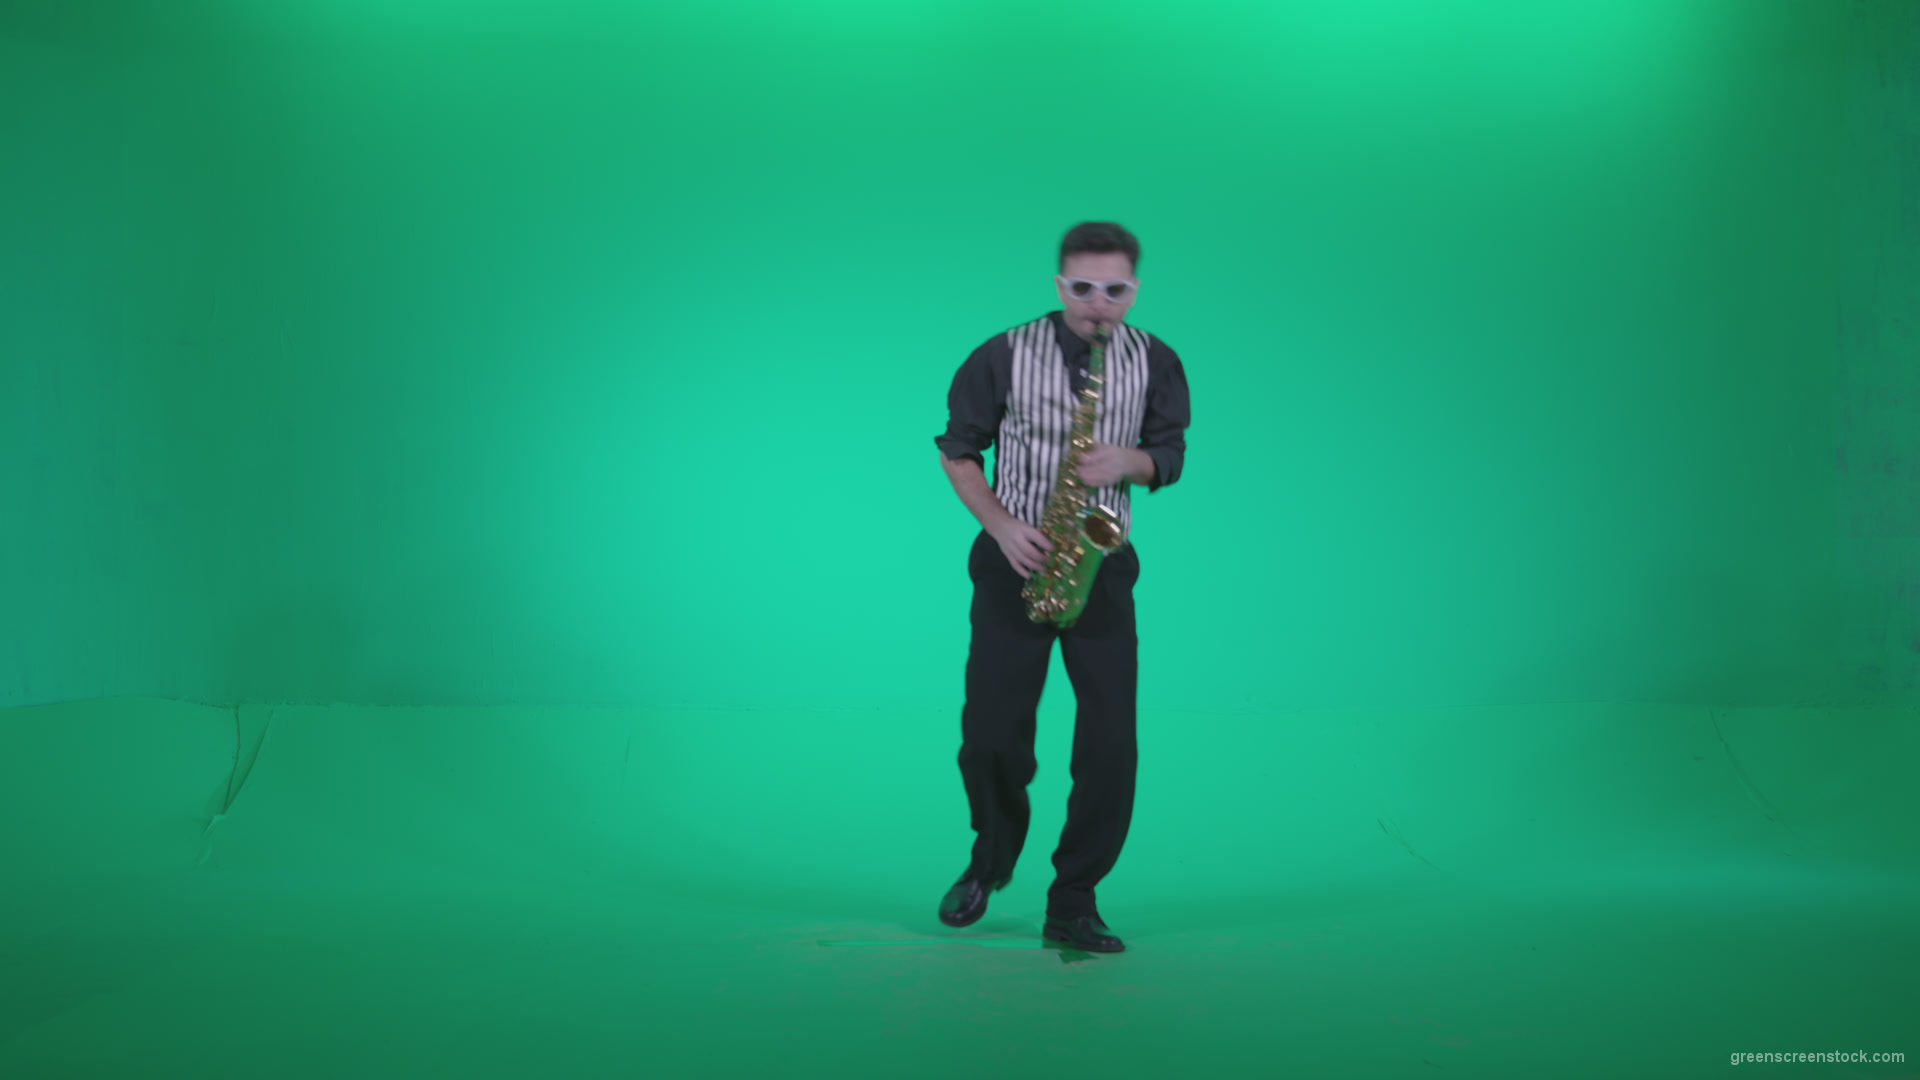 Saxophone-Virtuoso-Performer-s4_004 Green Screen Stock